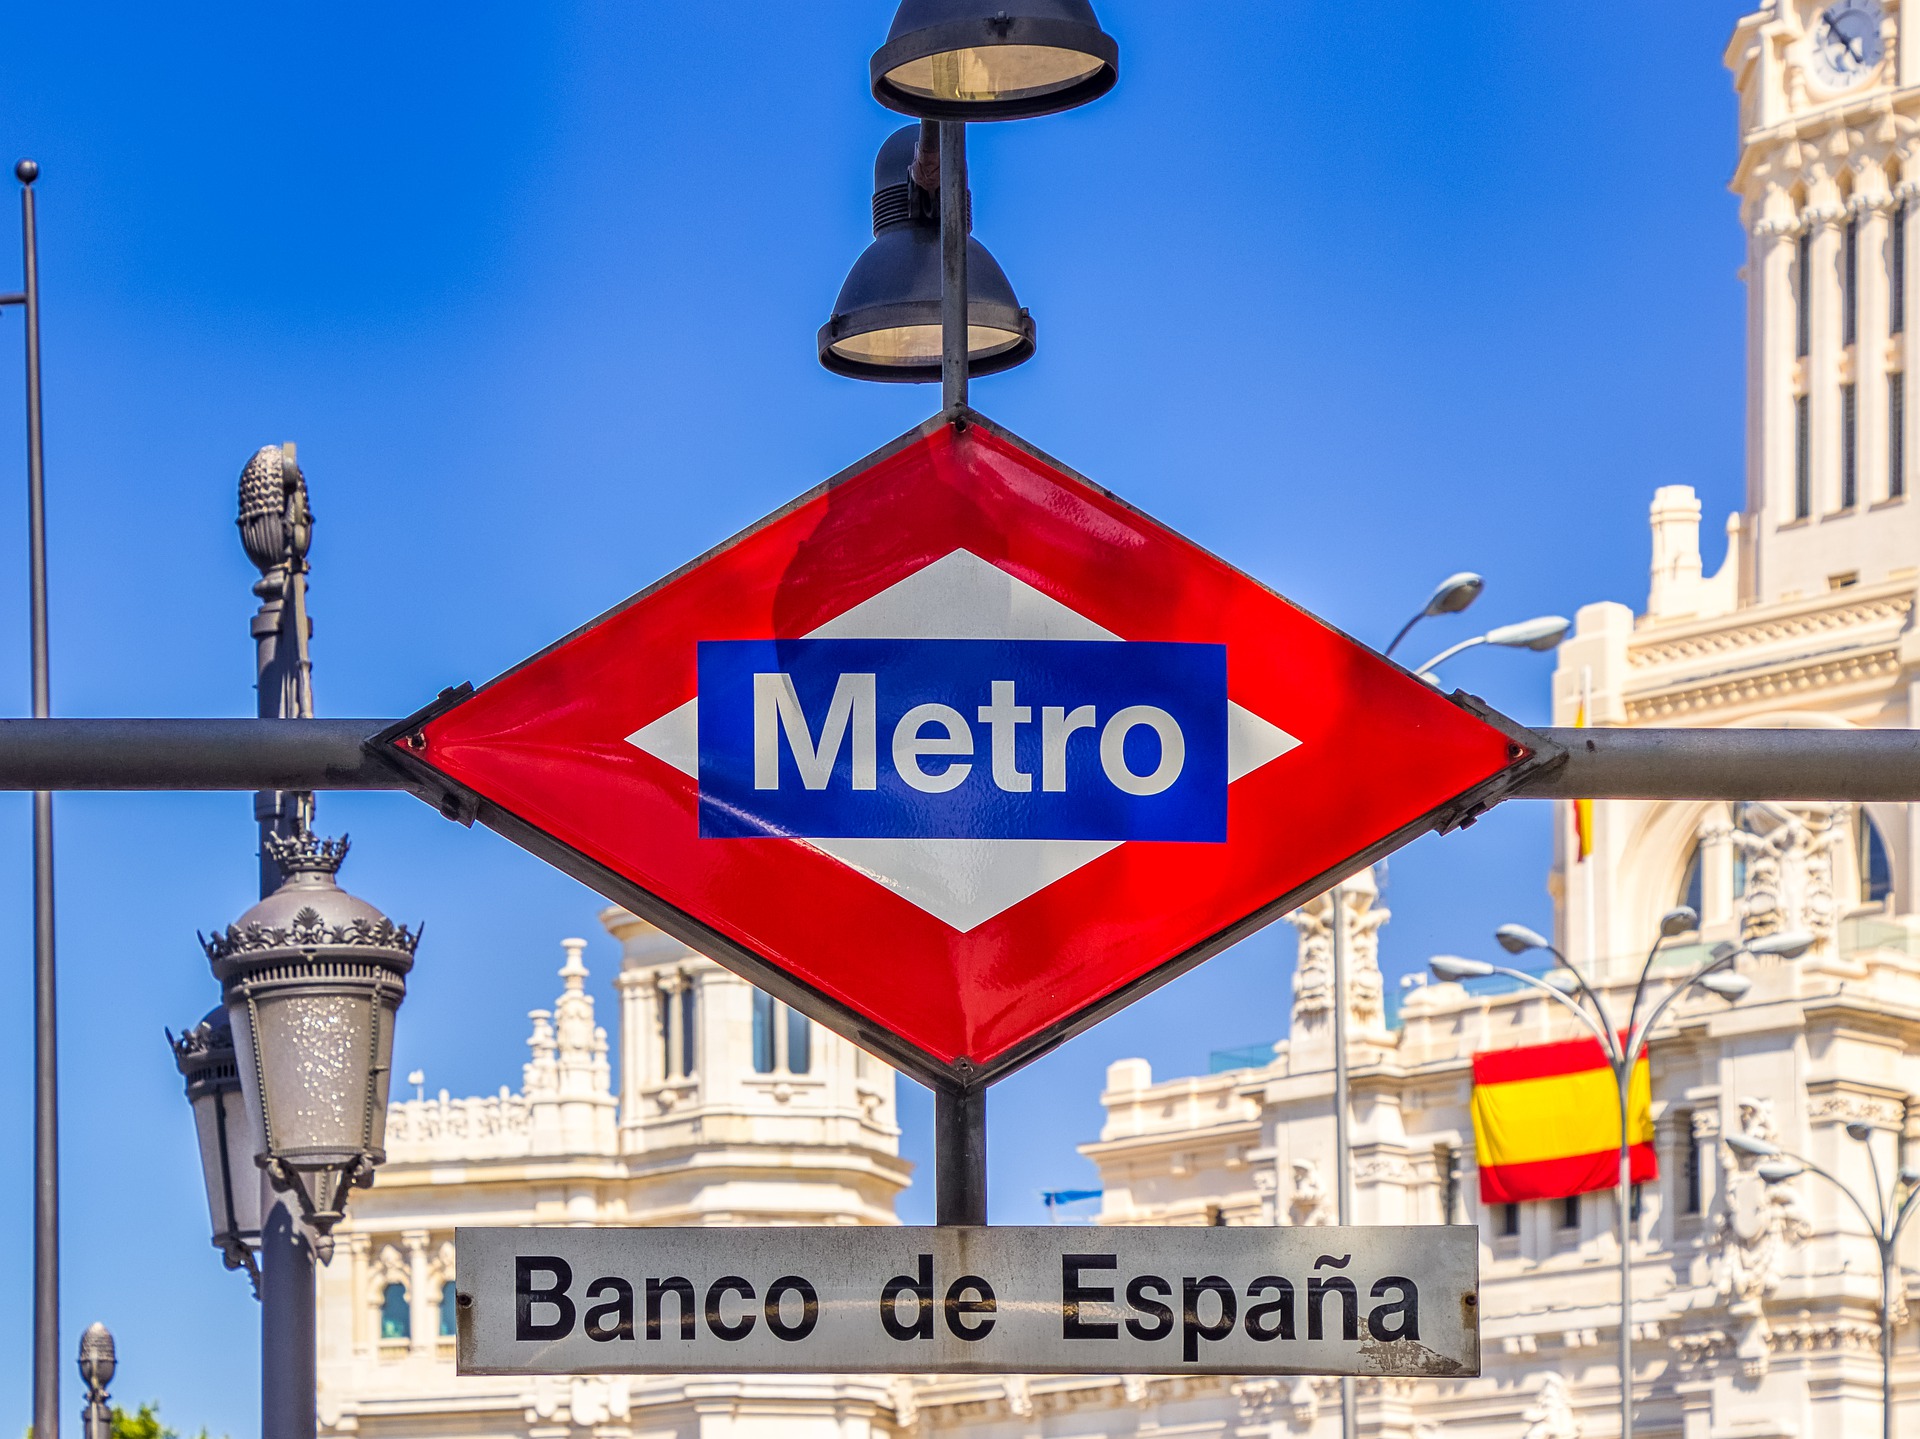 Metro de Madrid Banco de España Station